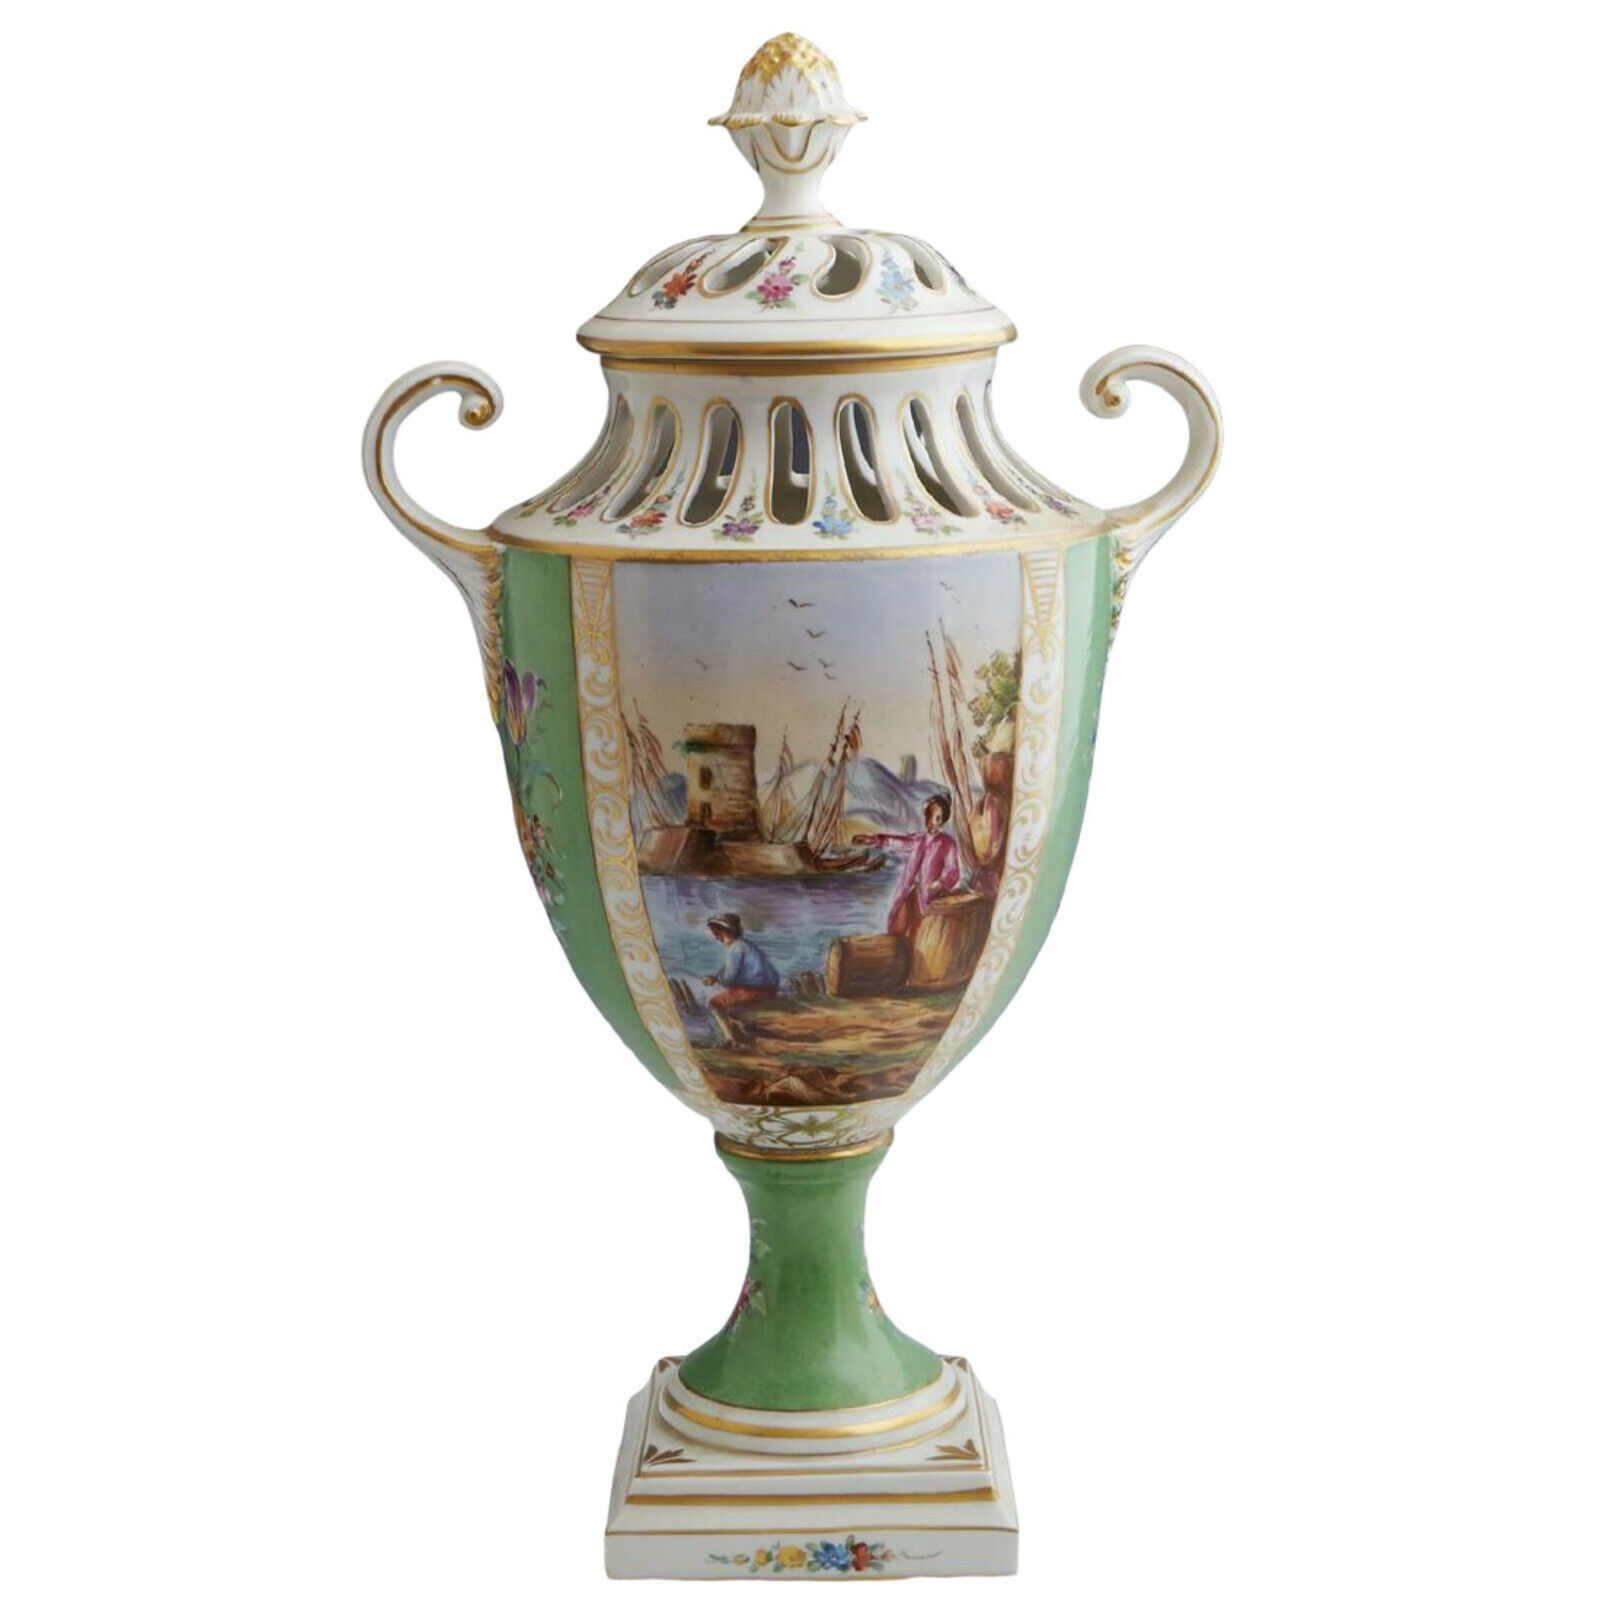 Antique Vase, Porcelain English Chelsea Gilt Decorated, Covered,1700s, Gorgeous